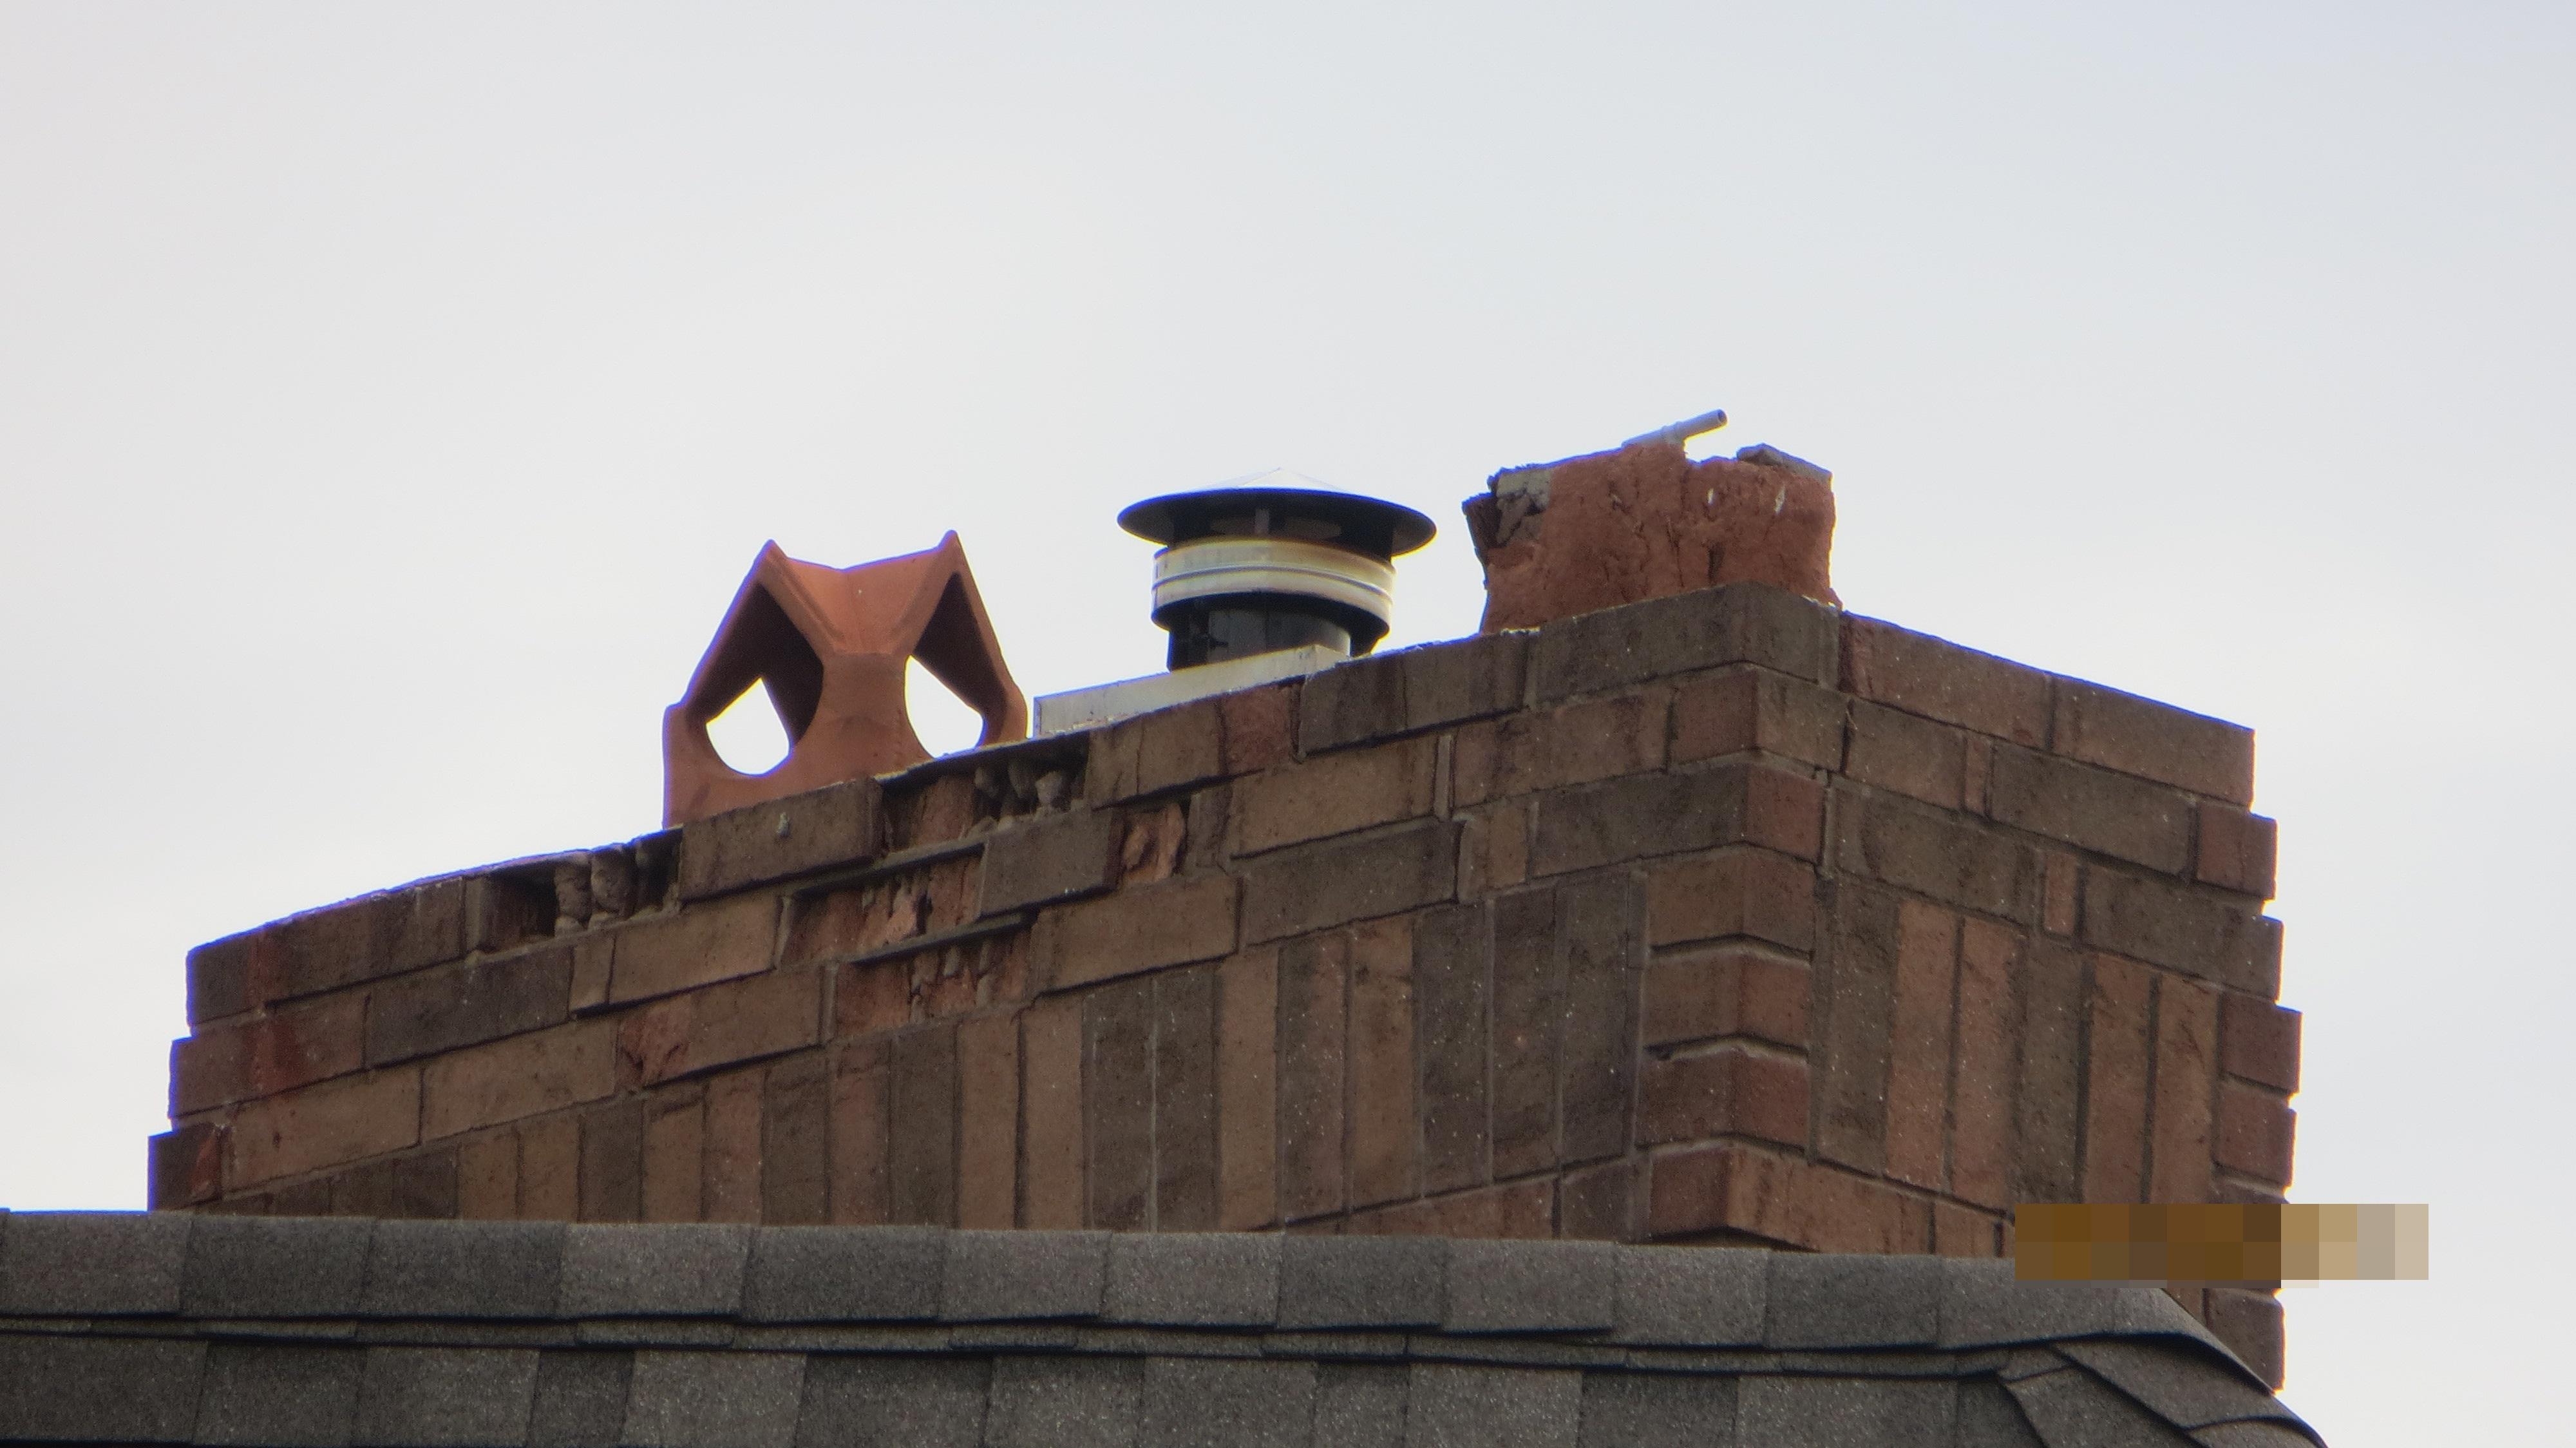 Damaged chimney